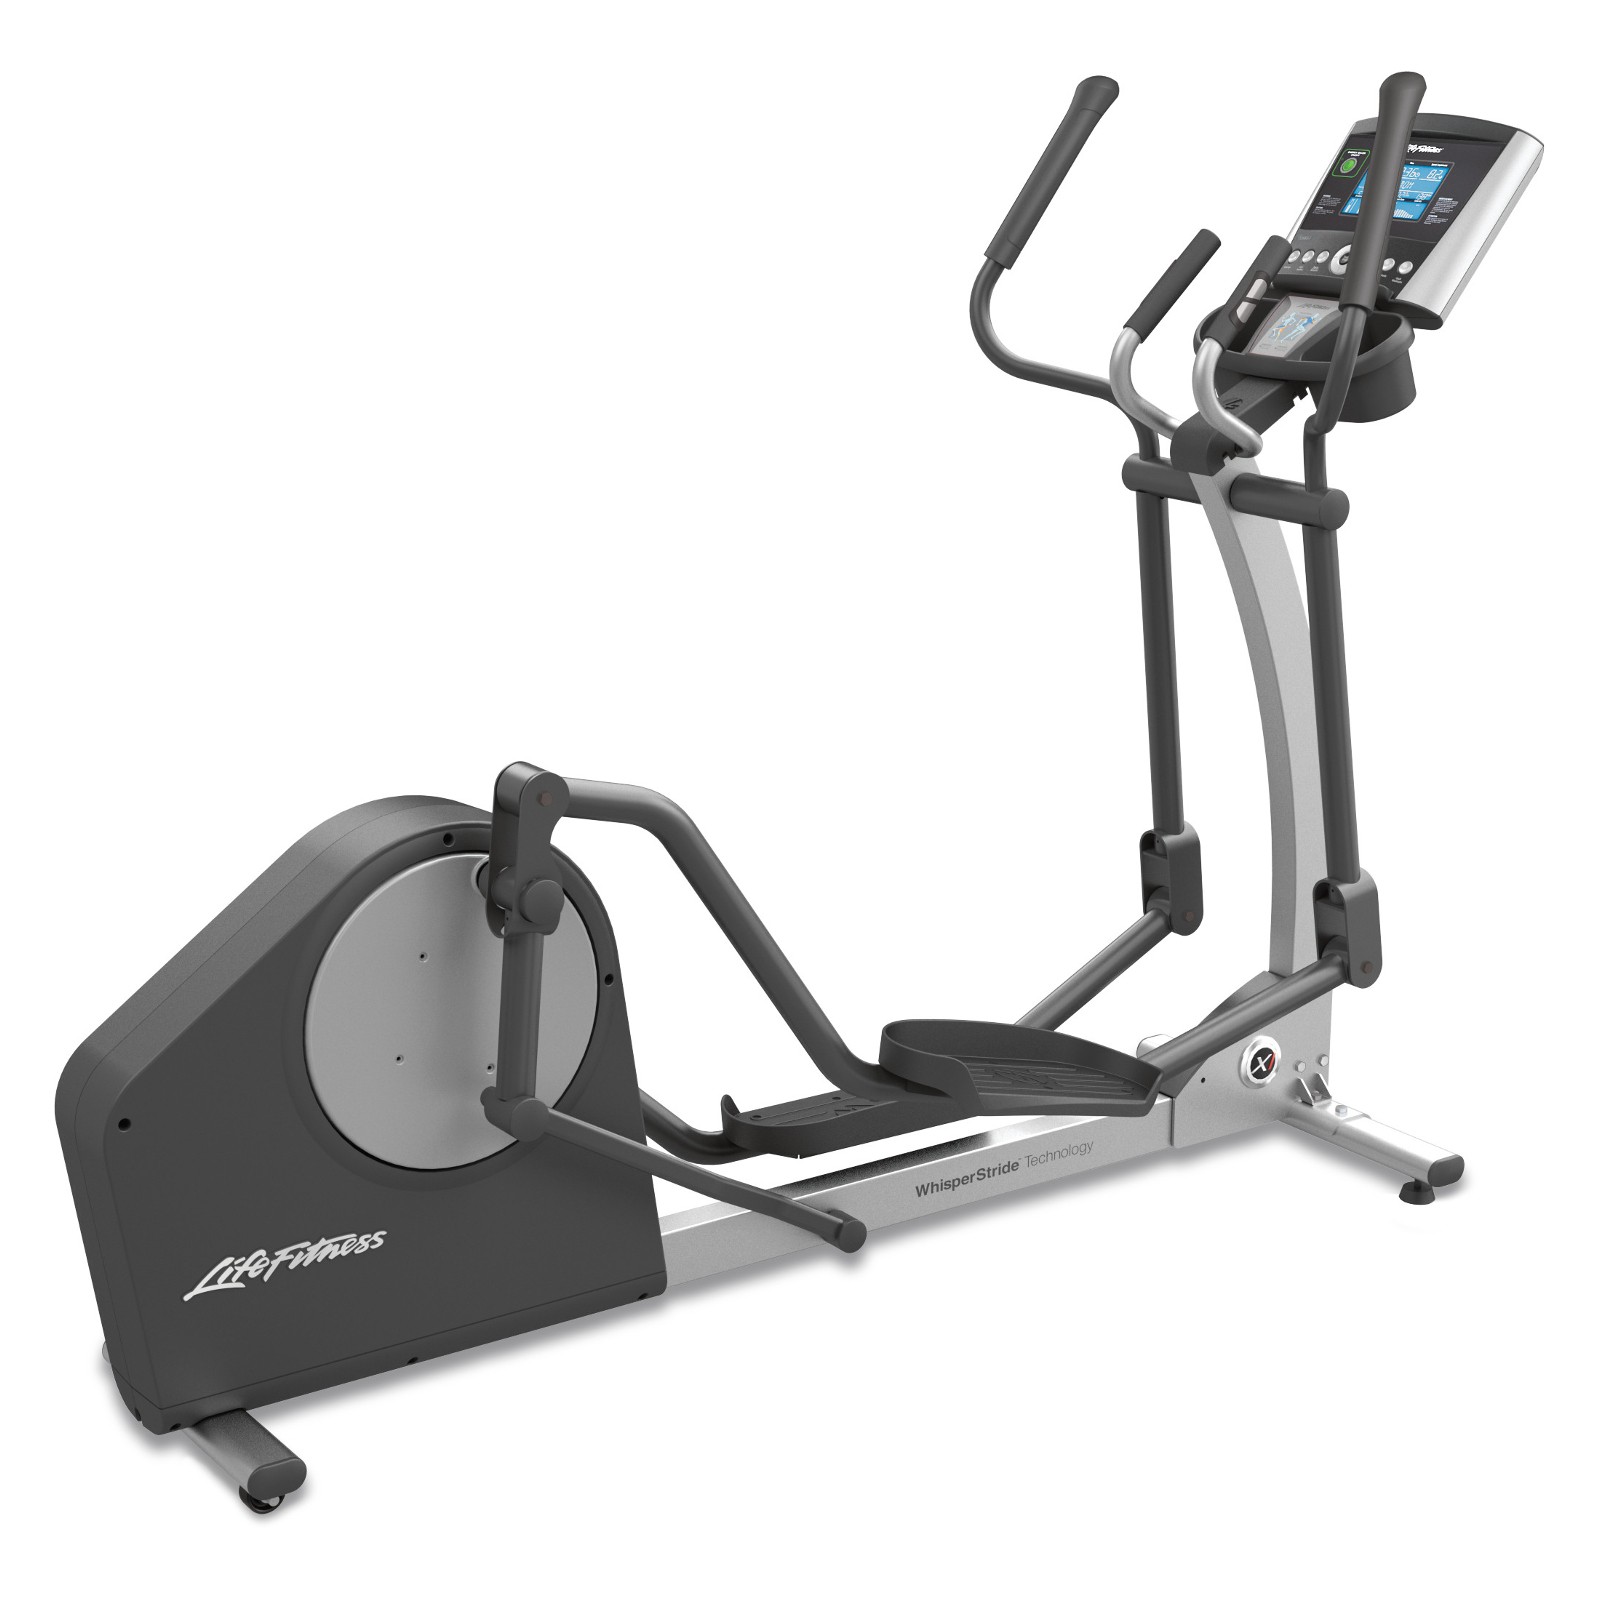 jeugd Annoteren Dragende cirkel Life Fitness elliptical cross trainer X1 Go buy with 40 customer ratings -  Fitshop